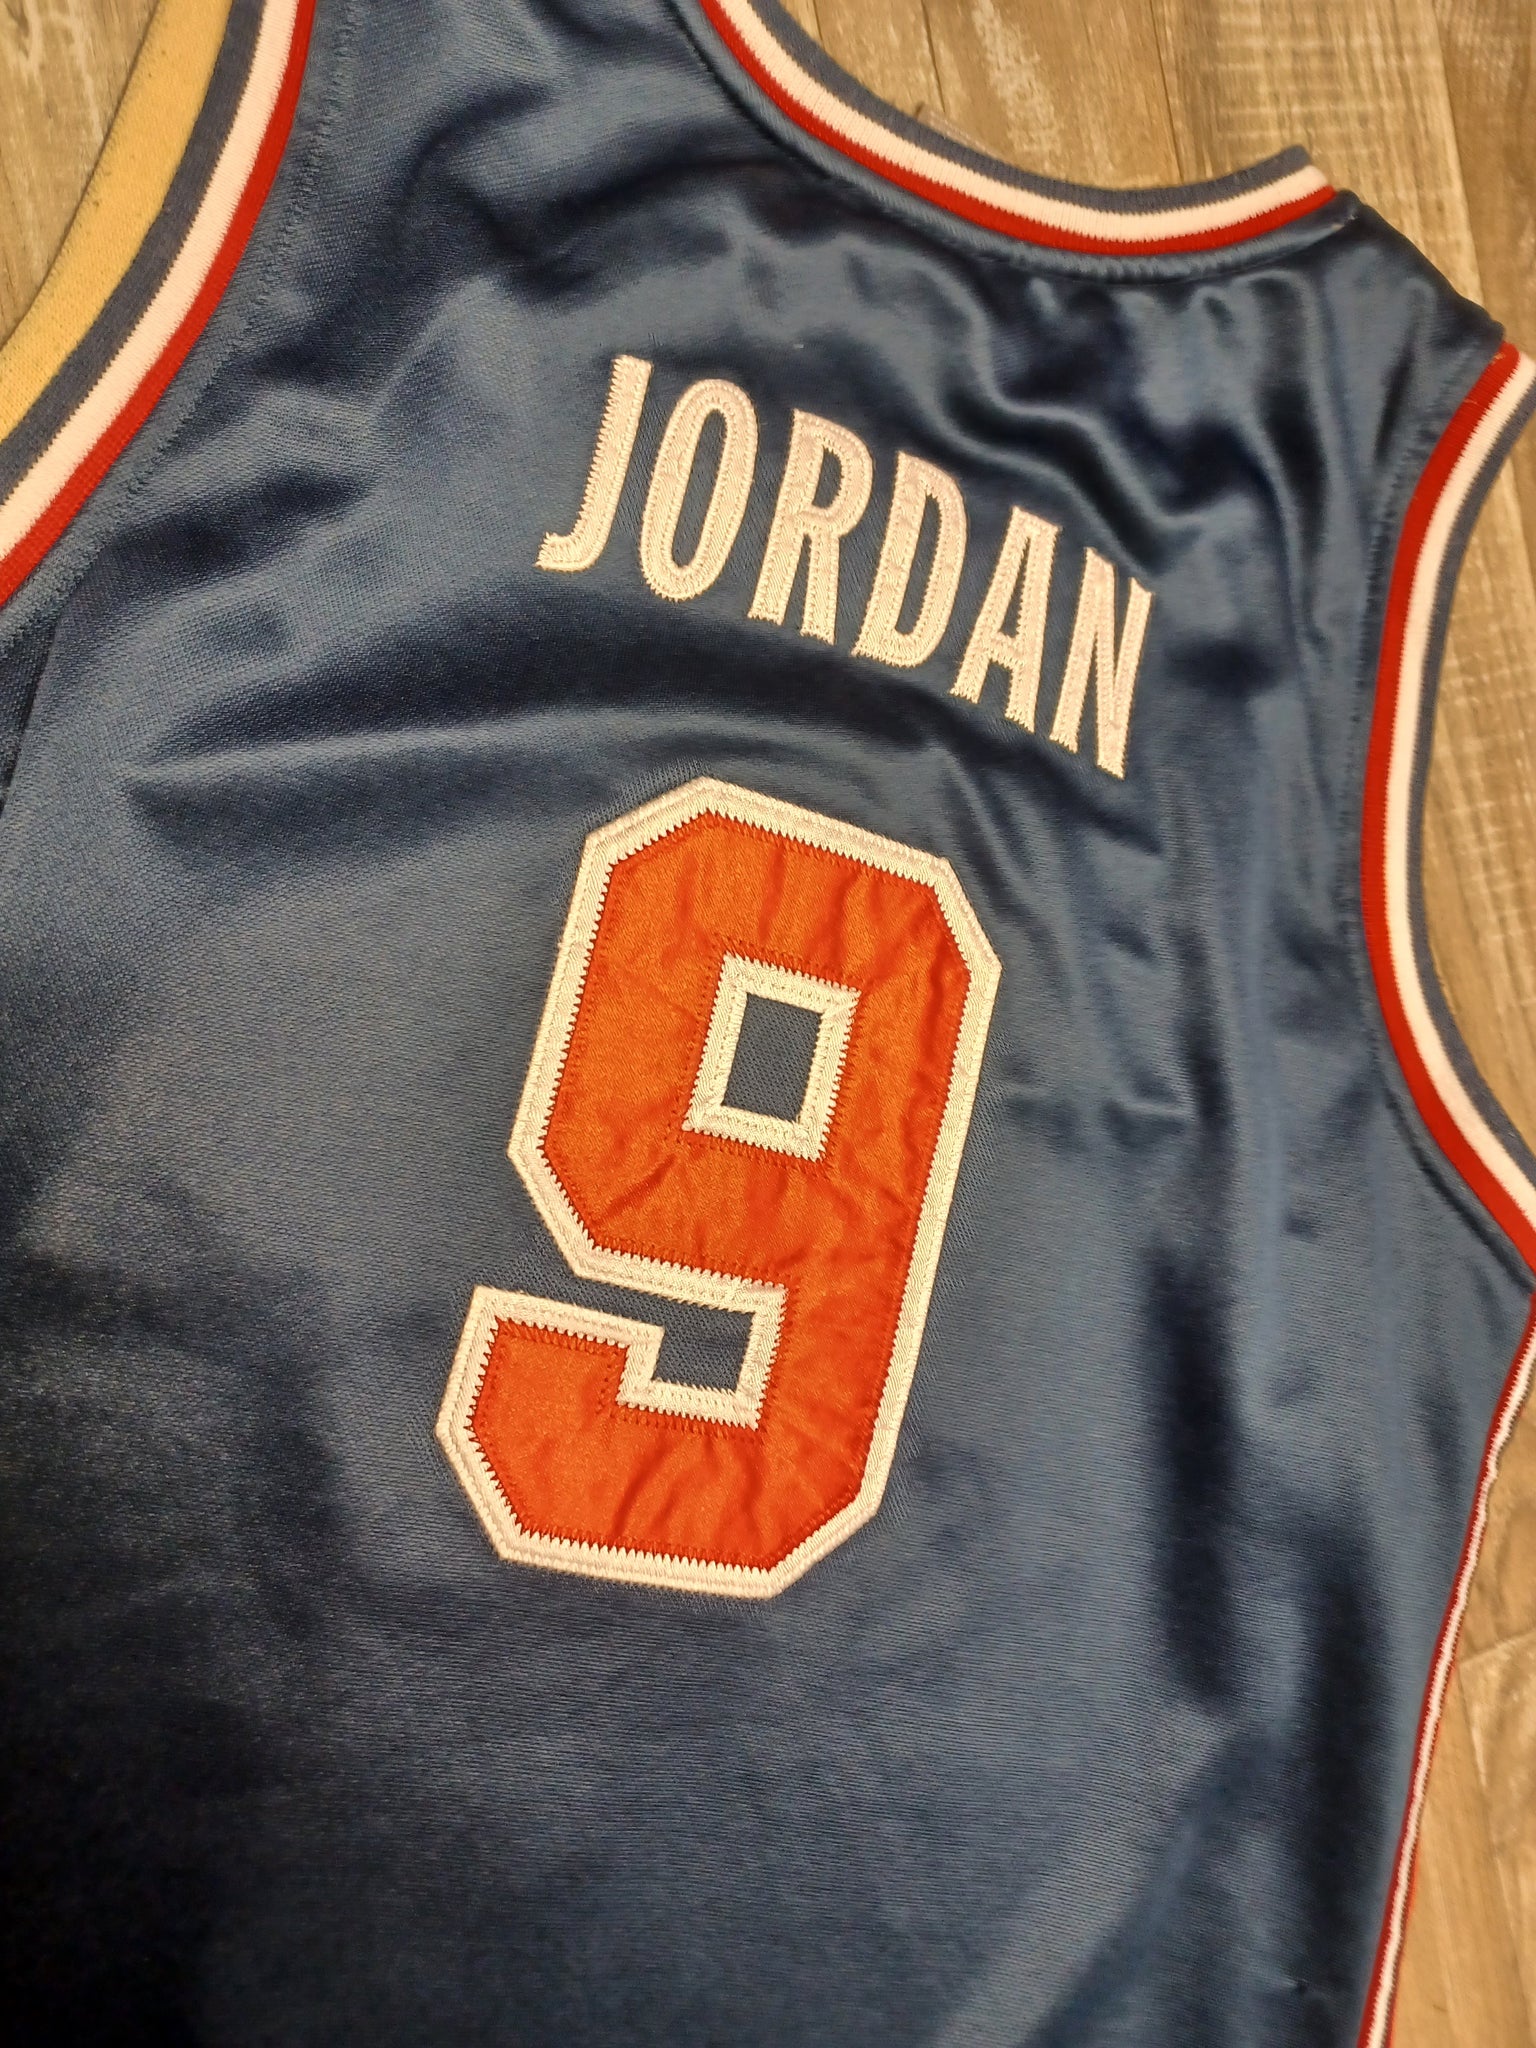 Michael Jordan - Chicago Bulls Red Jersey & Shorts (Type 1) – BlackOpsToys